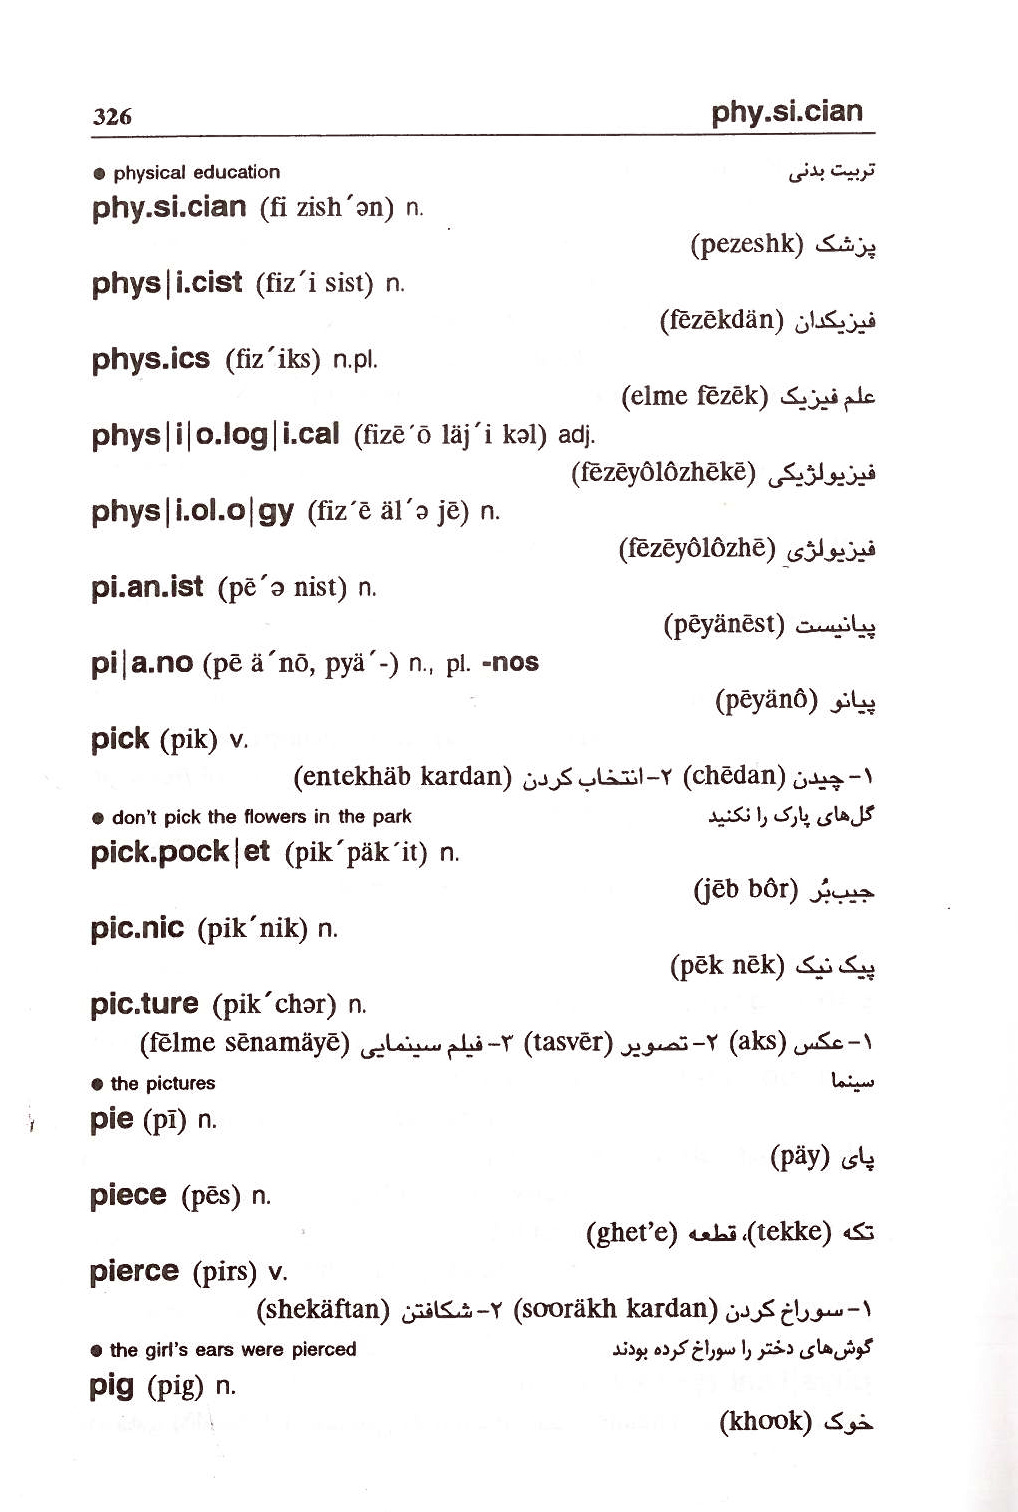 فرهنگ فارسی آموز پیشرو آریان پور (